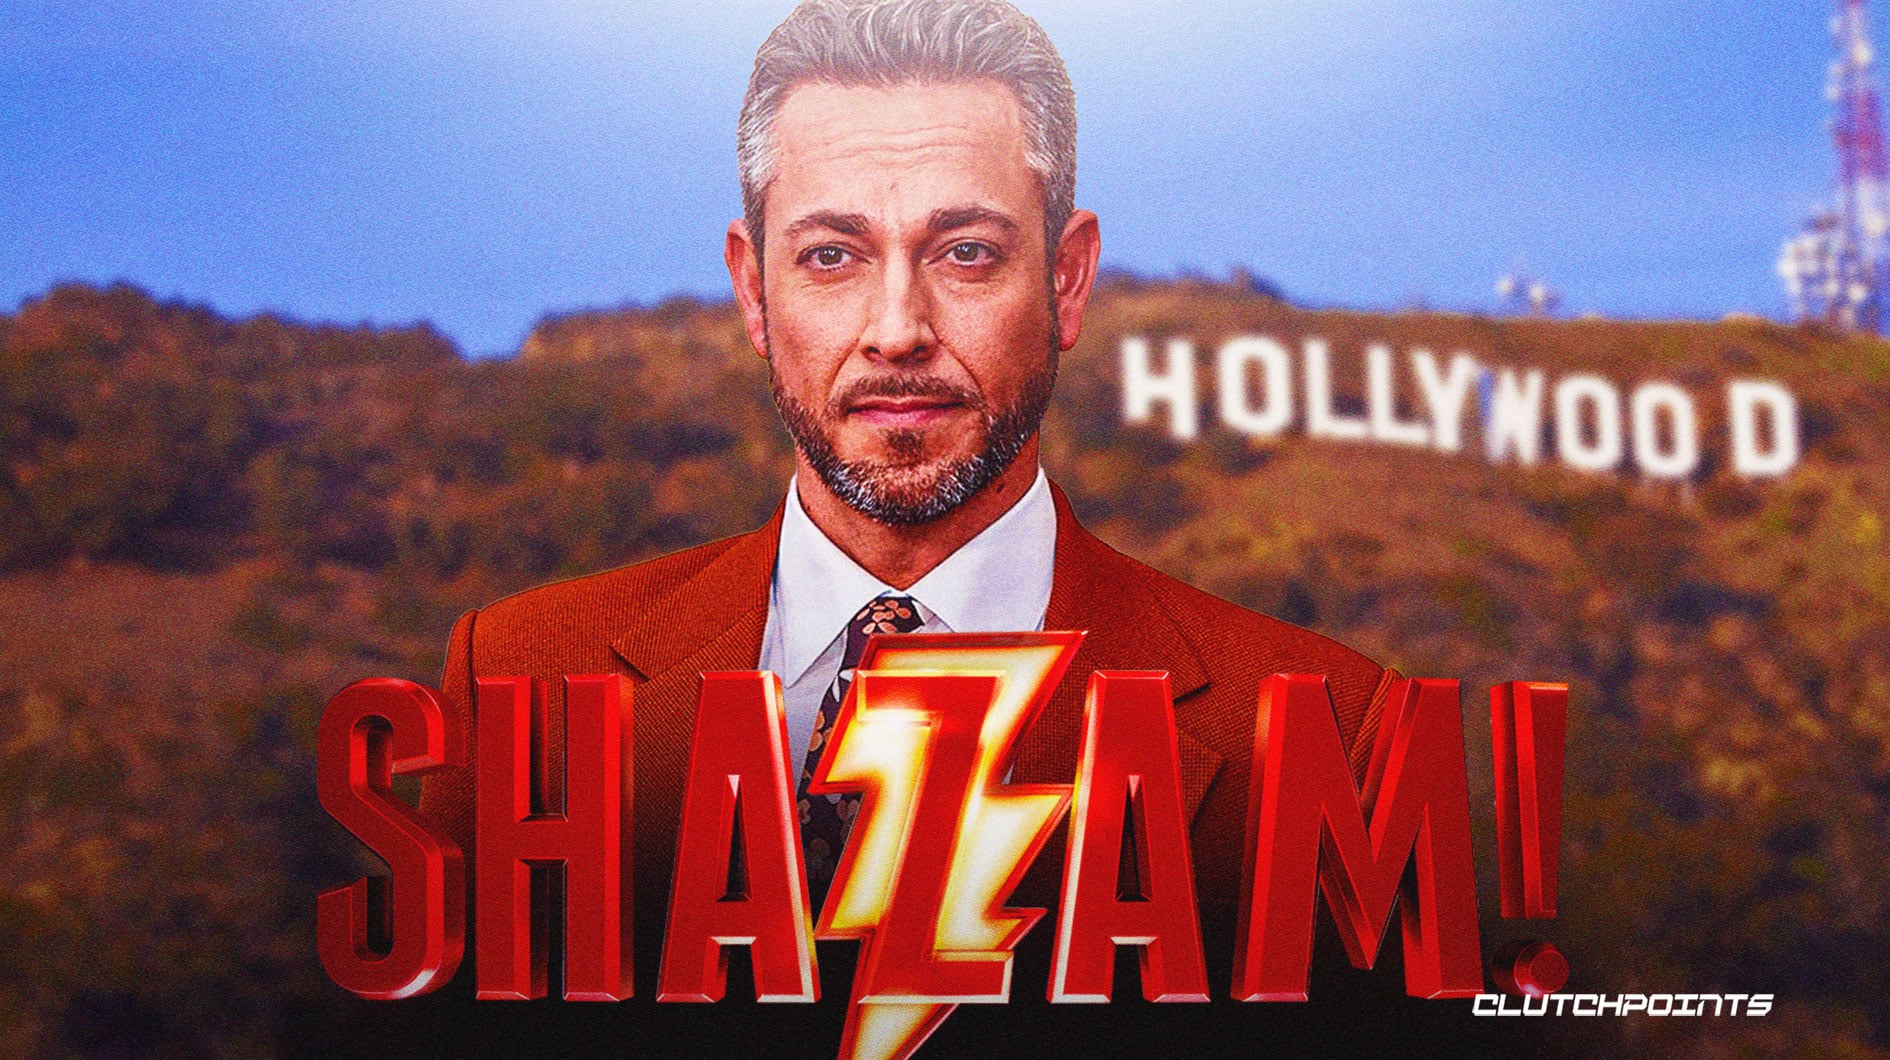 Shazam! Fury of the Gods star Zachary Levi is tired of Hollywood garbage